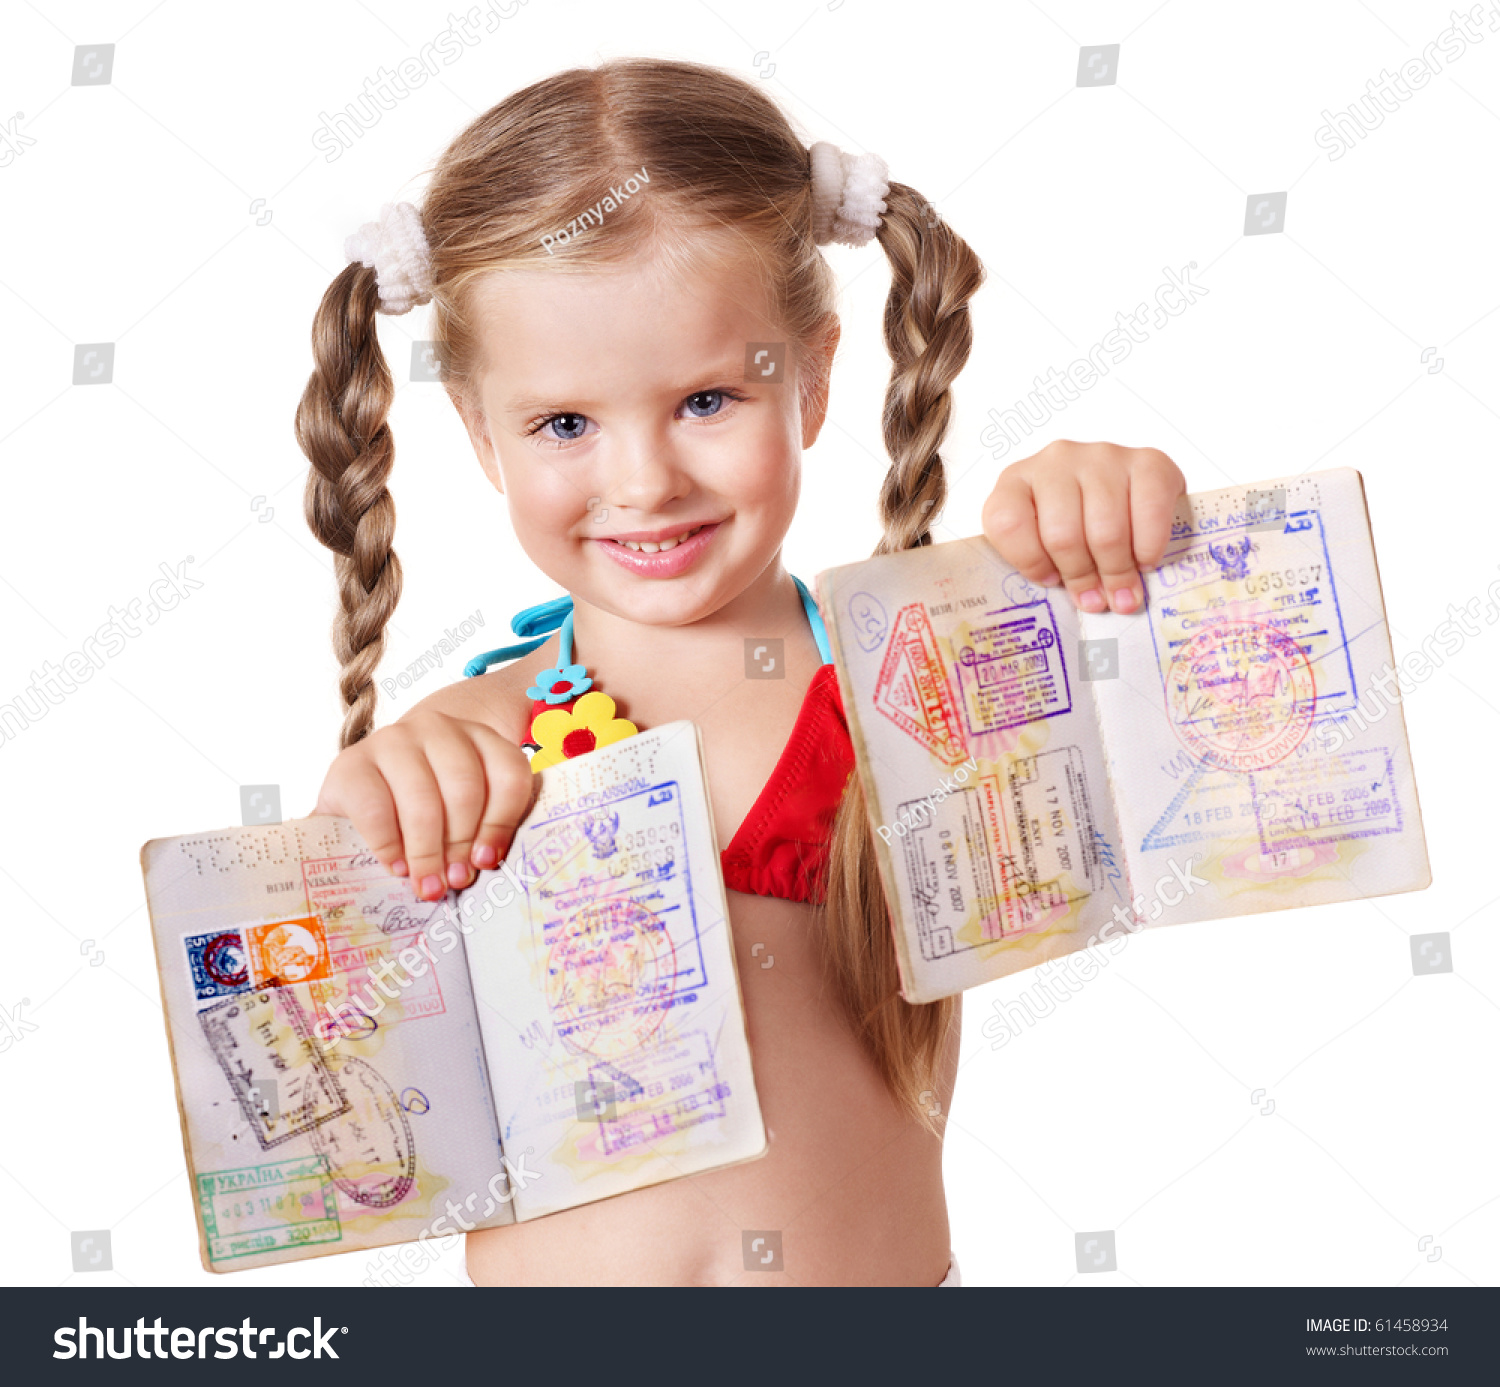 Children holding Passport